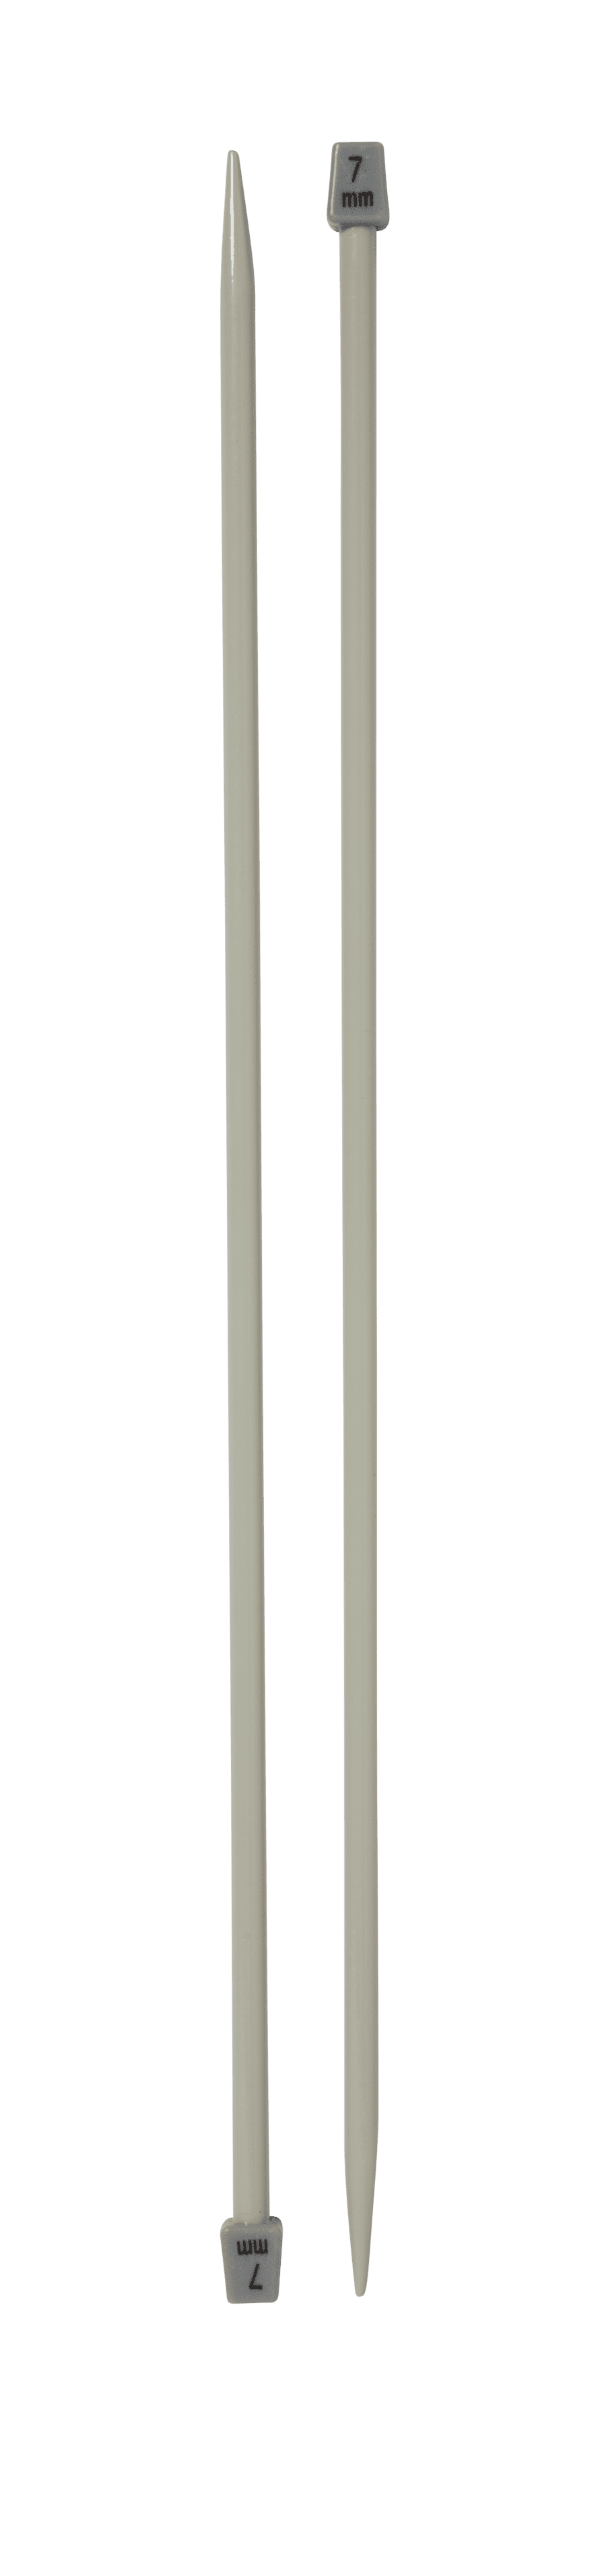 Breinaalden – 2 – 7 mm – Variatie 6 - Wibra